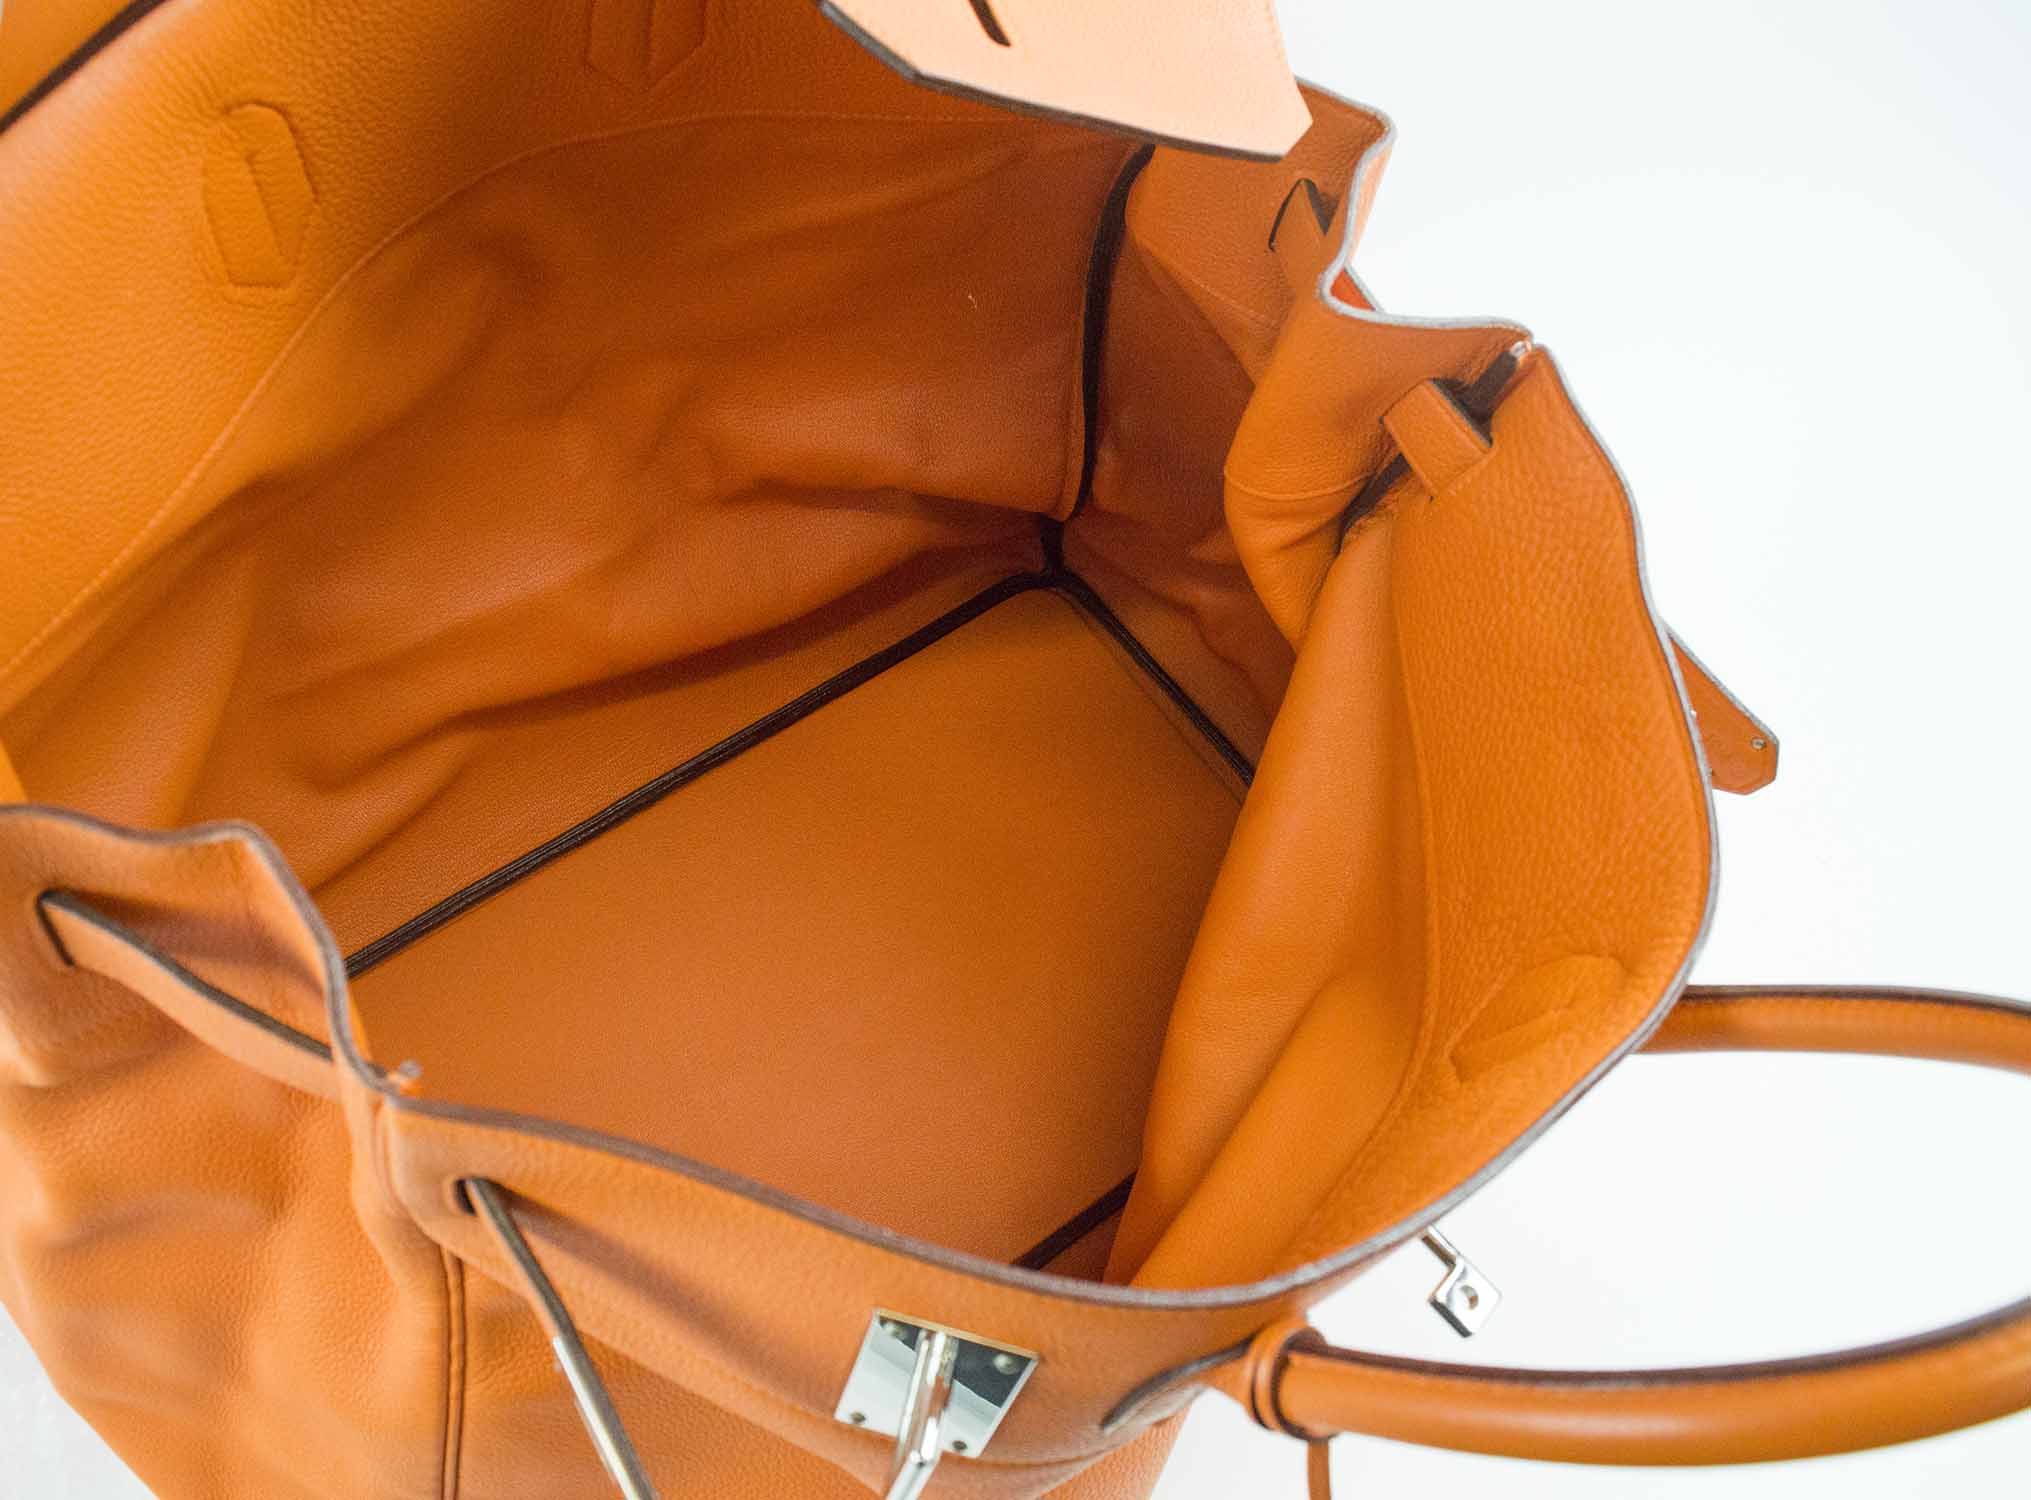 Hermès Haut à Courroies: The Original Birkin Bag